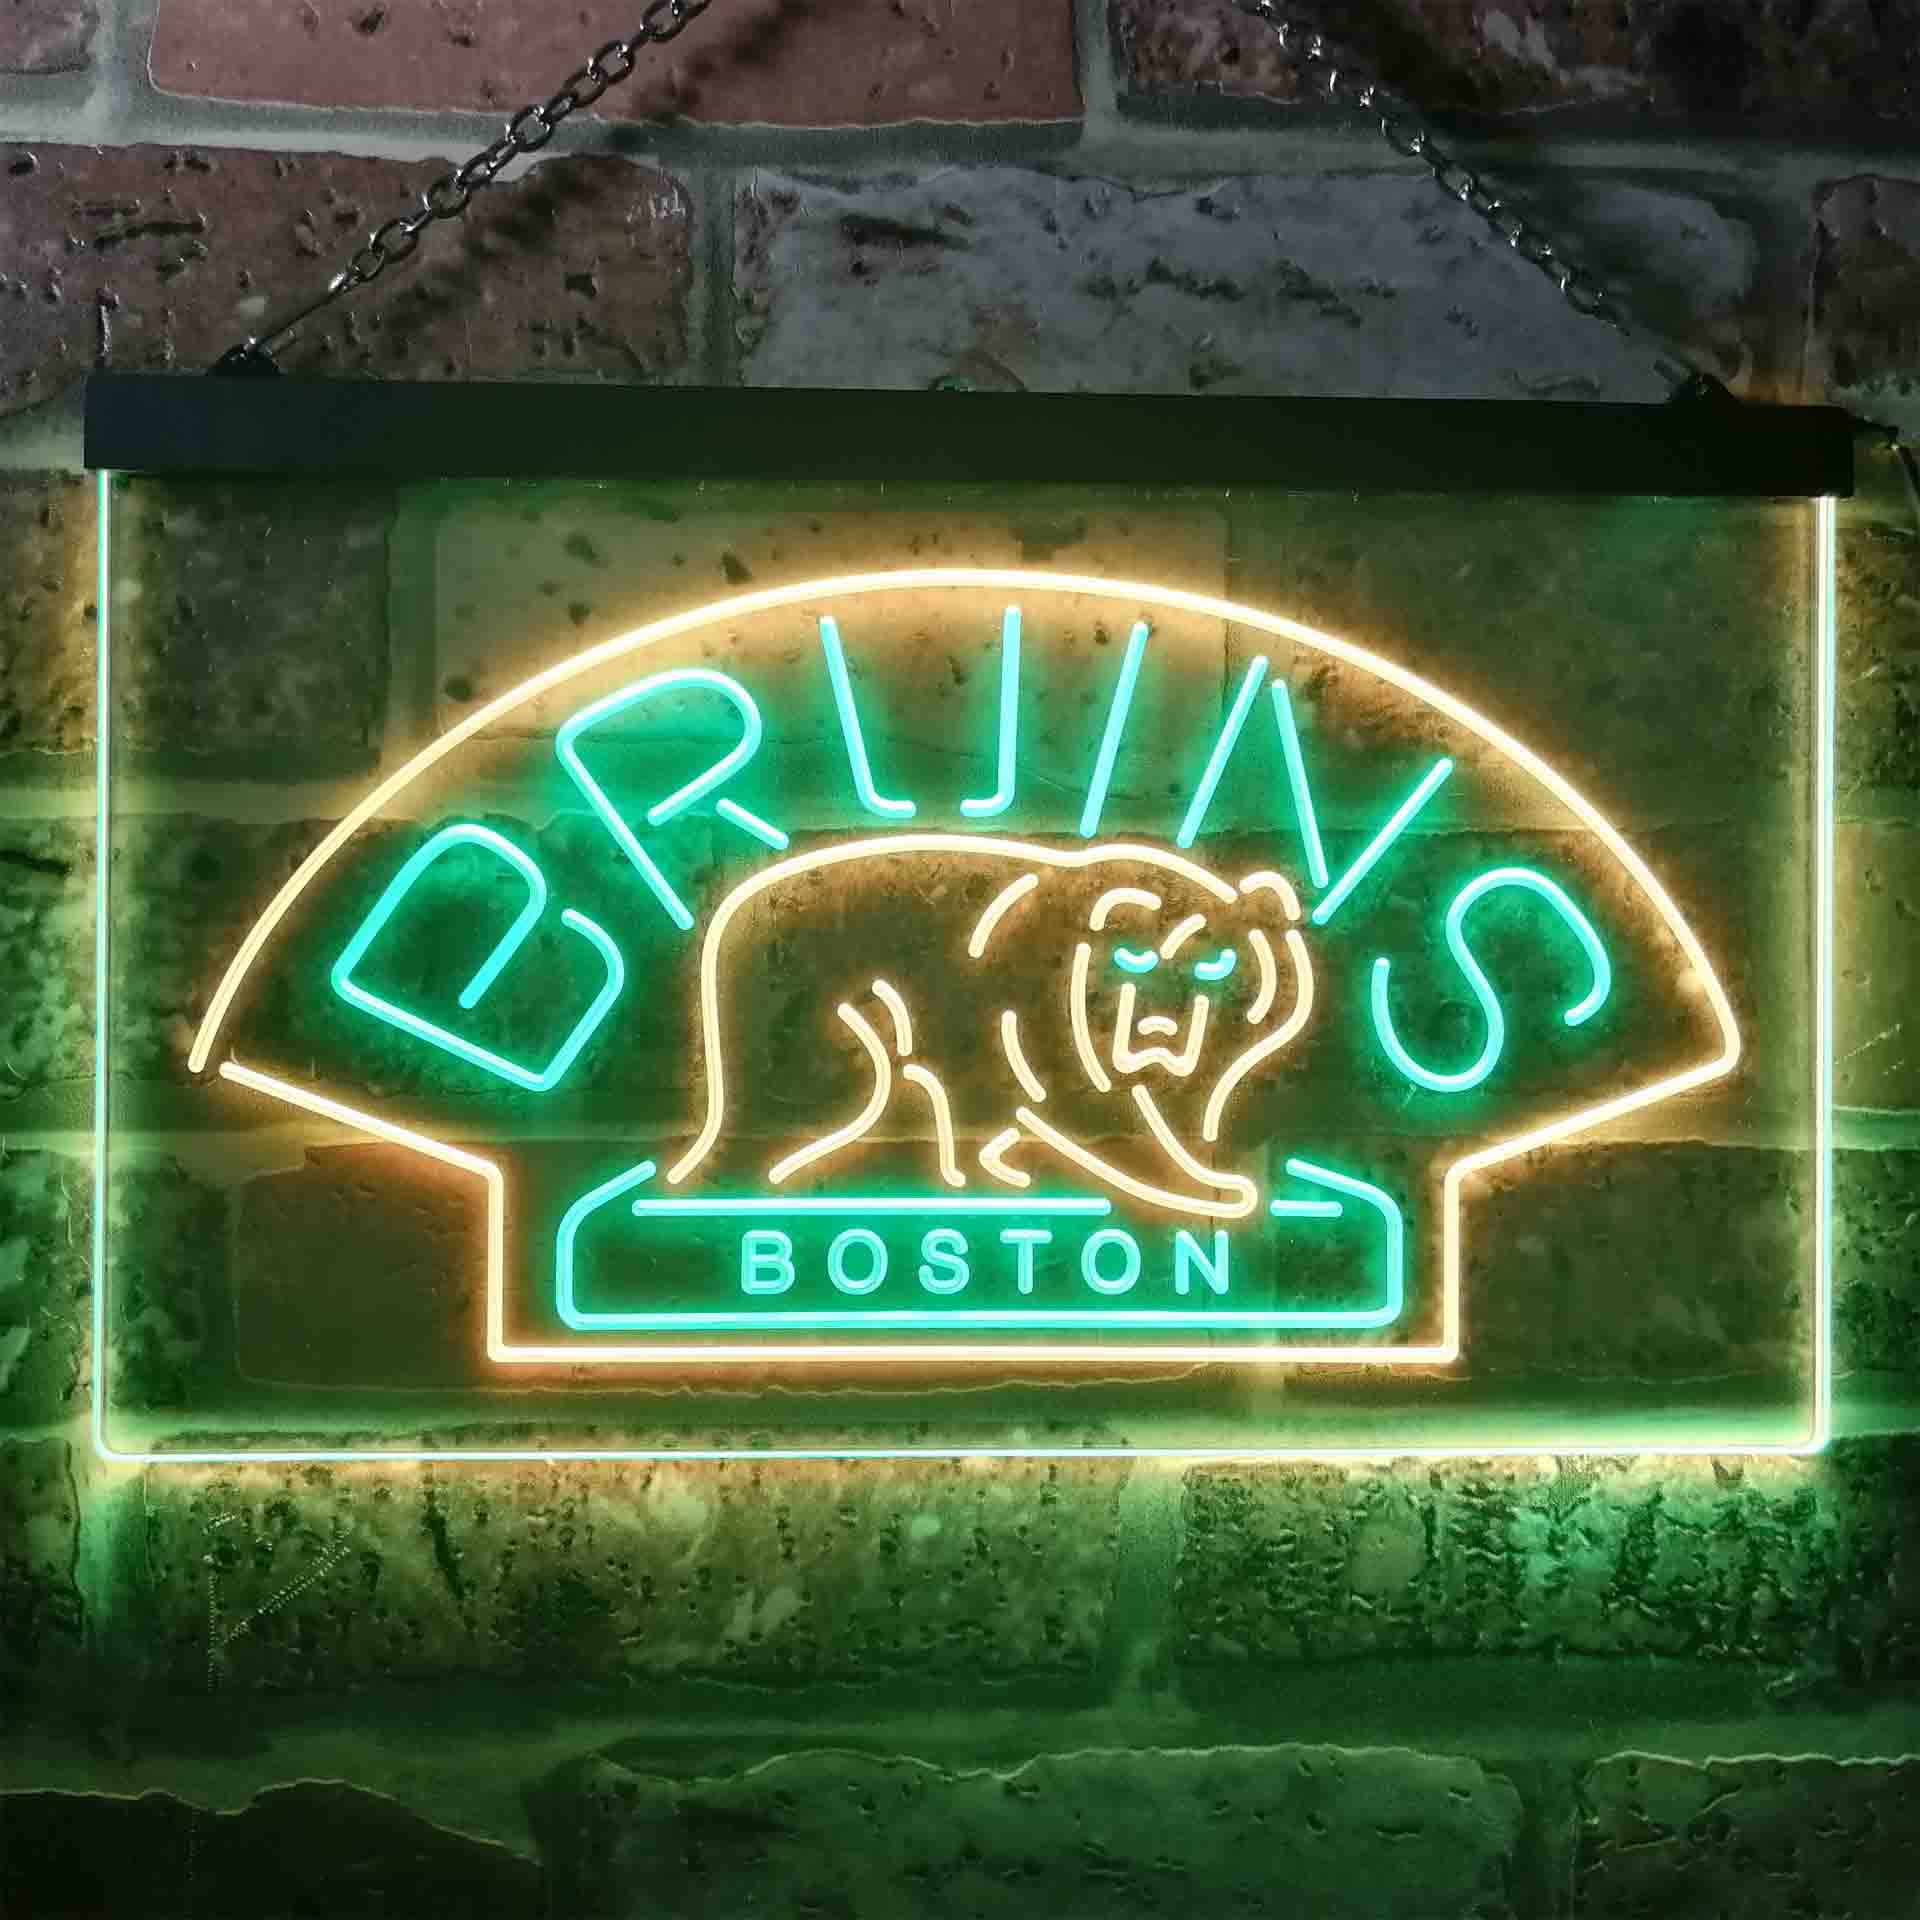 Boston Bruins League Club LED Neon Sign